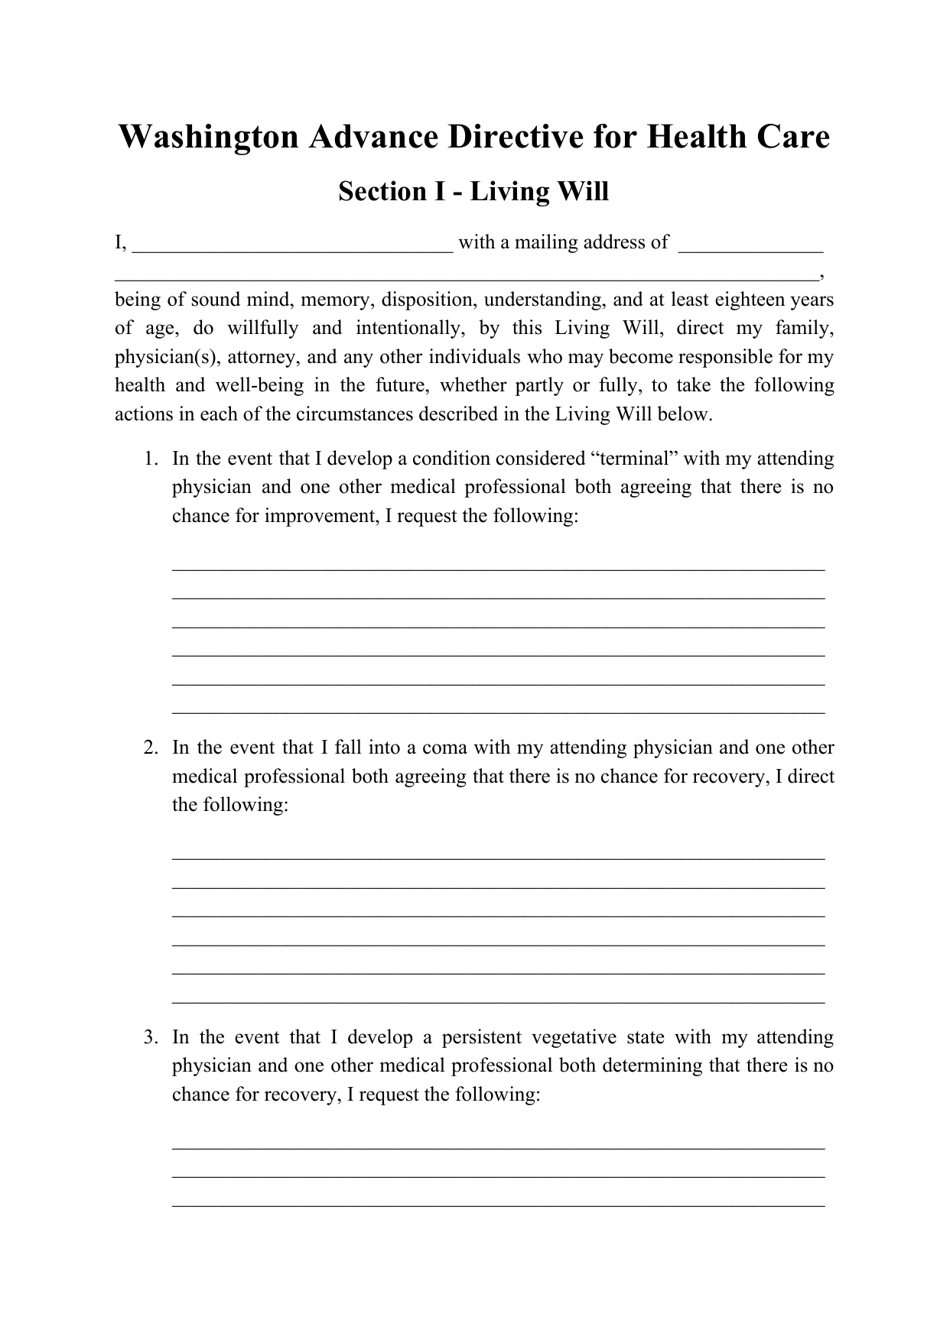 Advance Directive for Health Care Form - Washington, Page 1